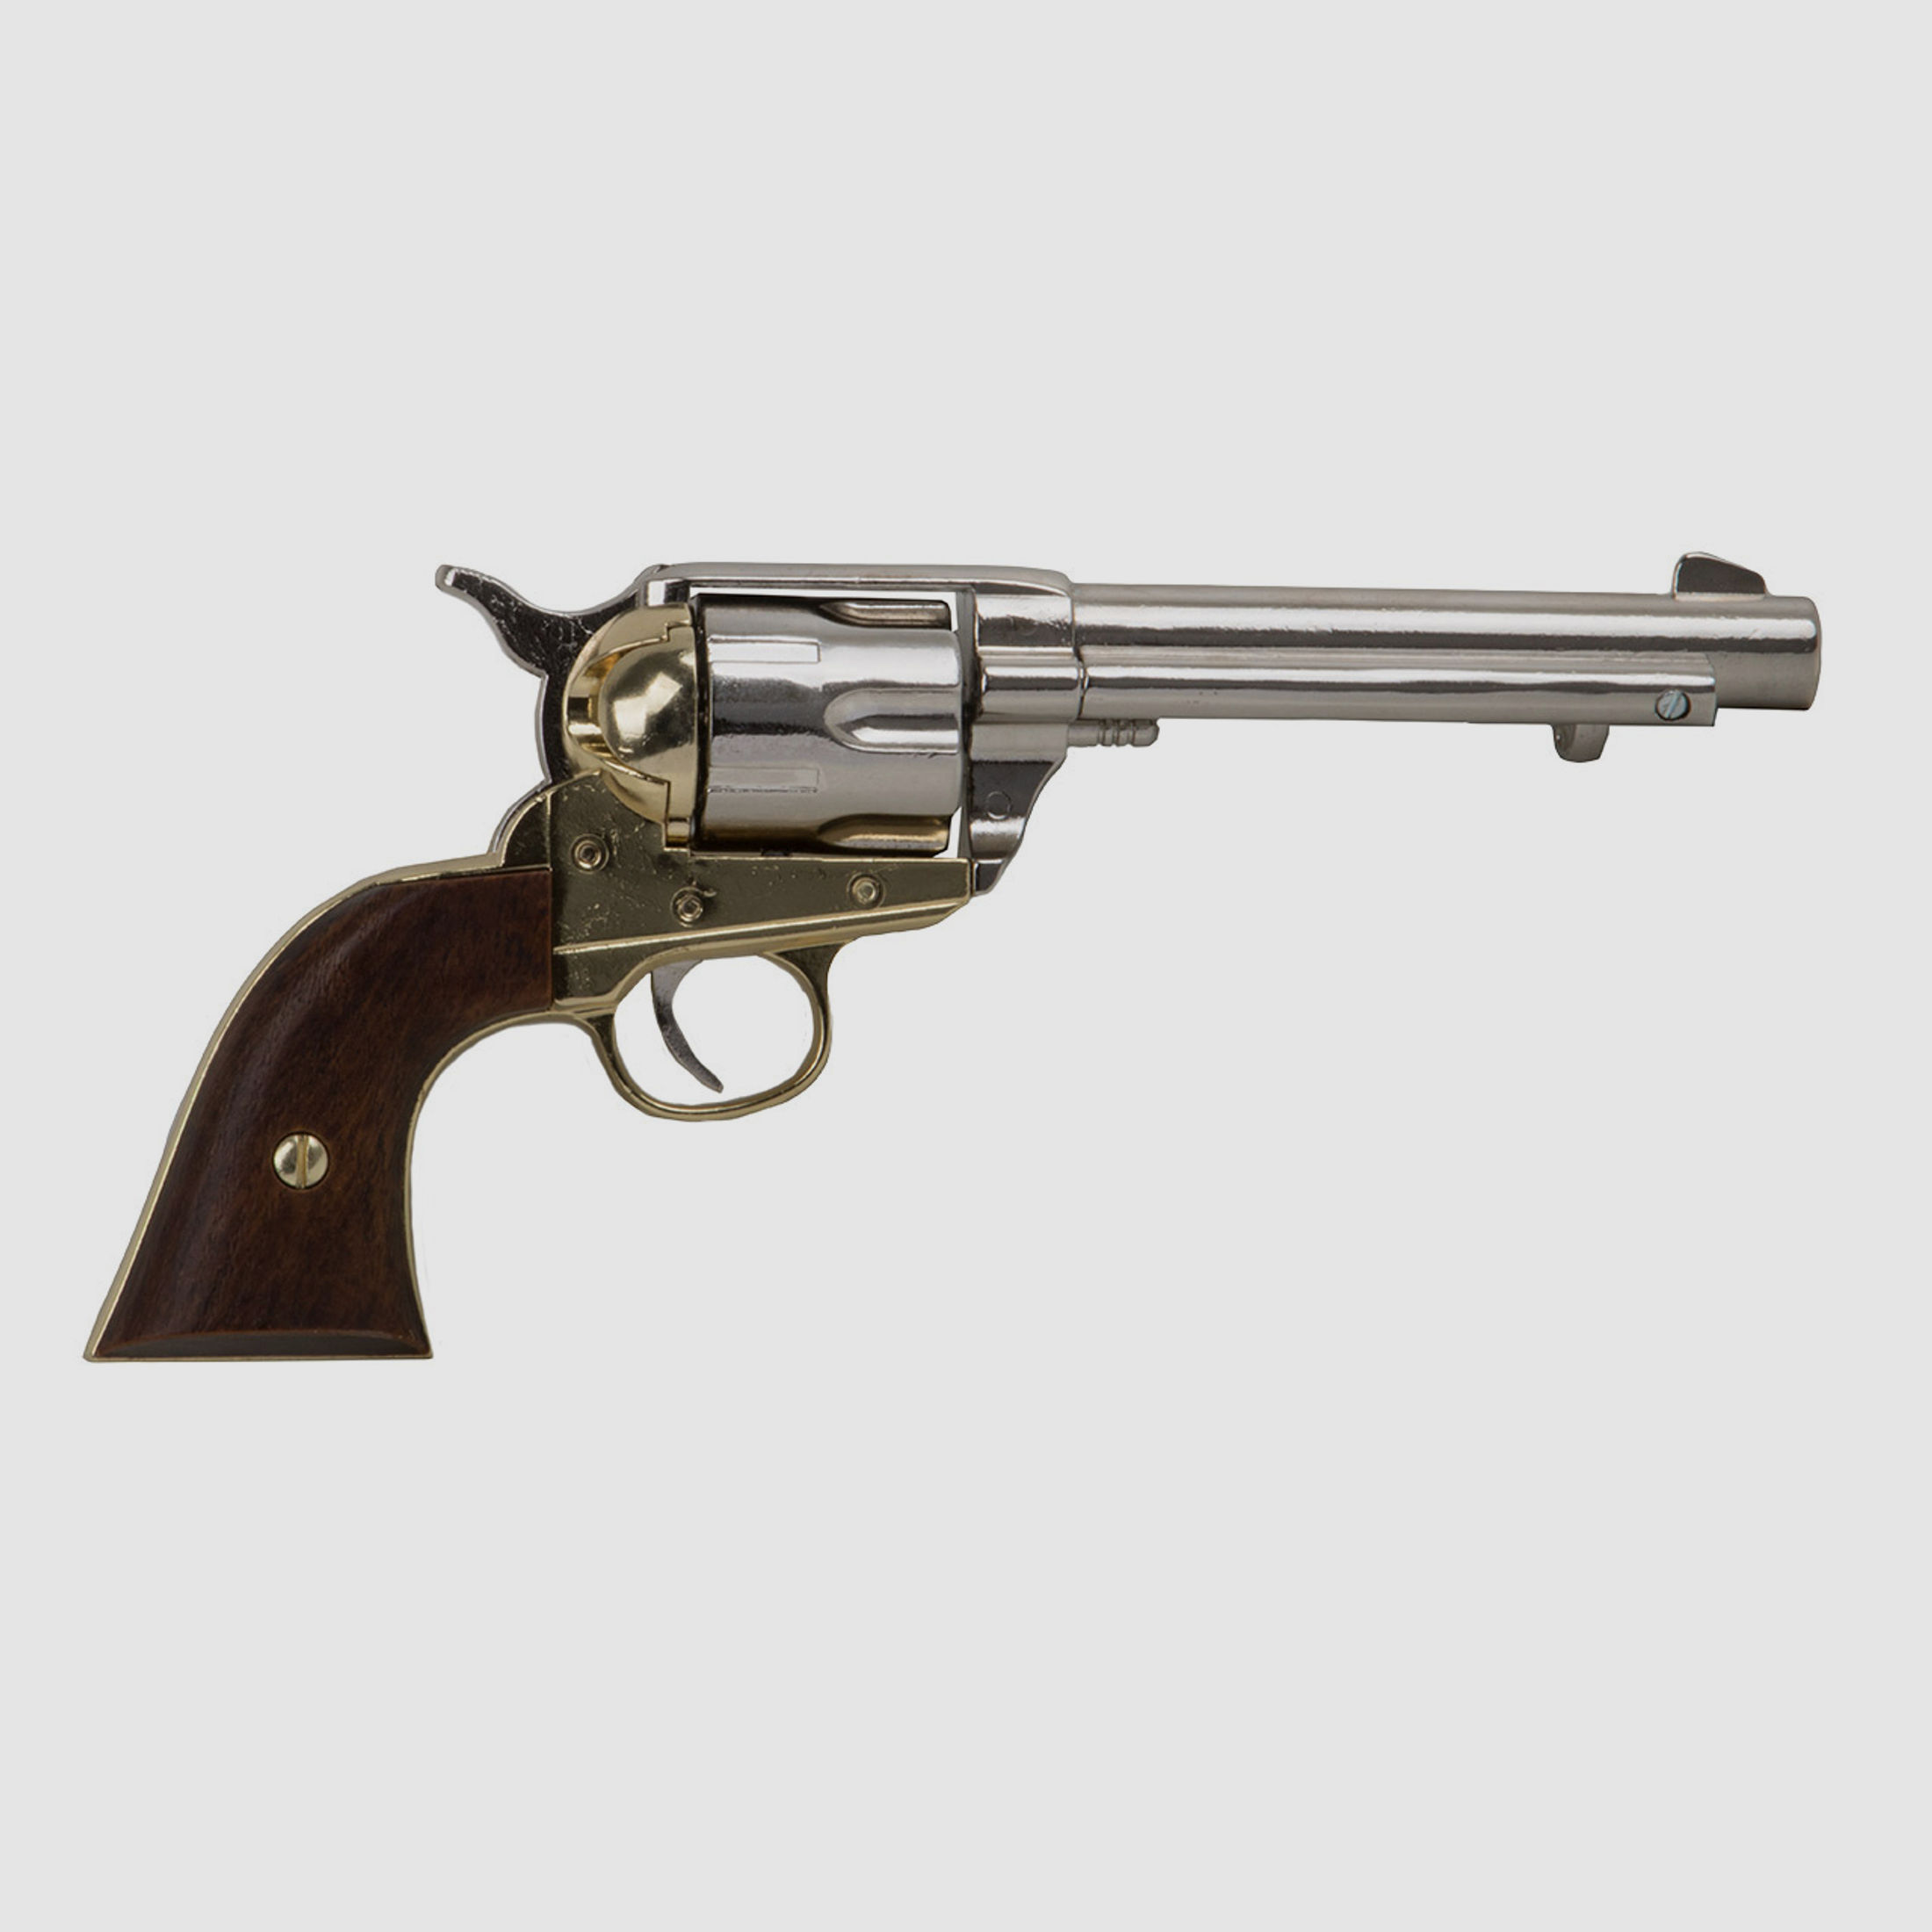 Set 5 Western Revolvergurt rechts 100 cm 2 Holster hellbraun und 2 Deko Revolver Kolser Colt SAA .45 Peacemaker 5,5 Zoll nickel gold